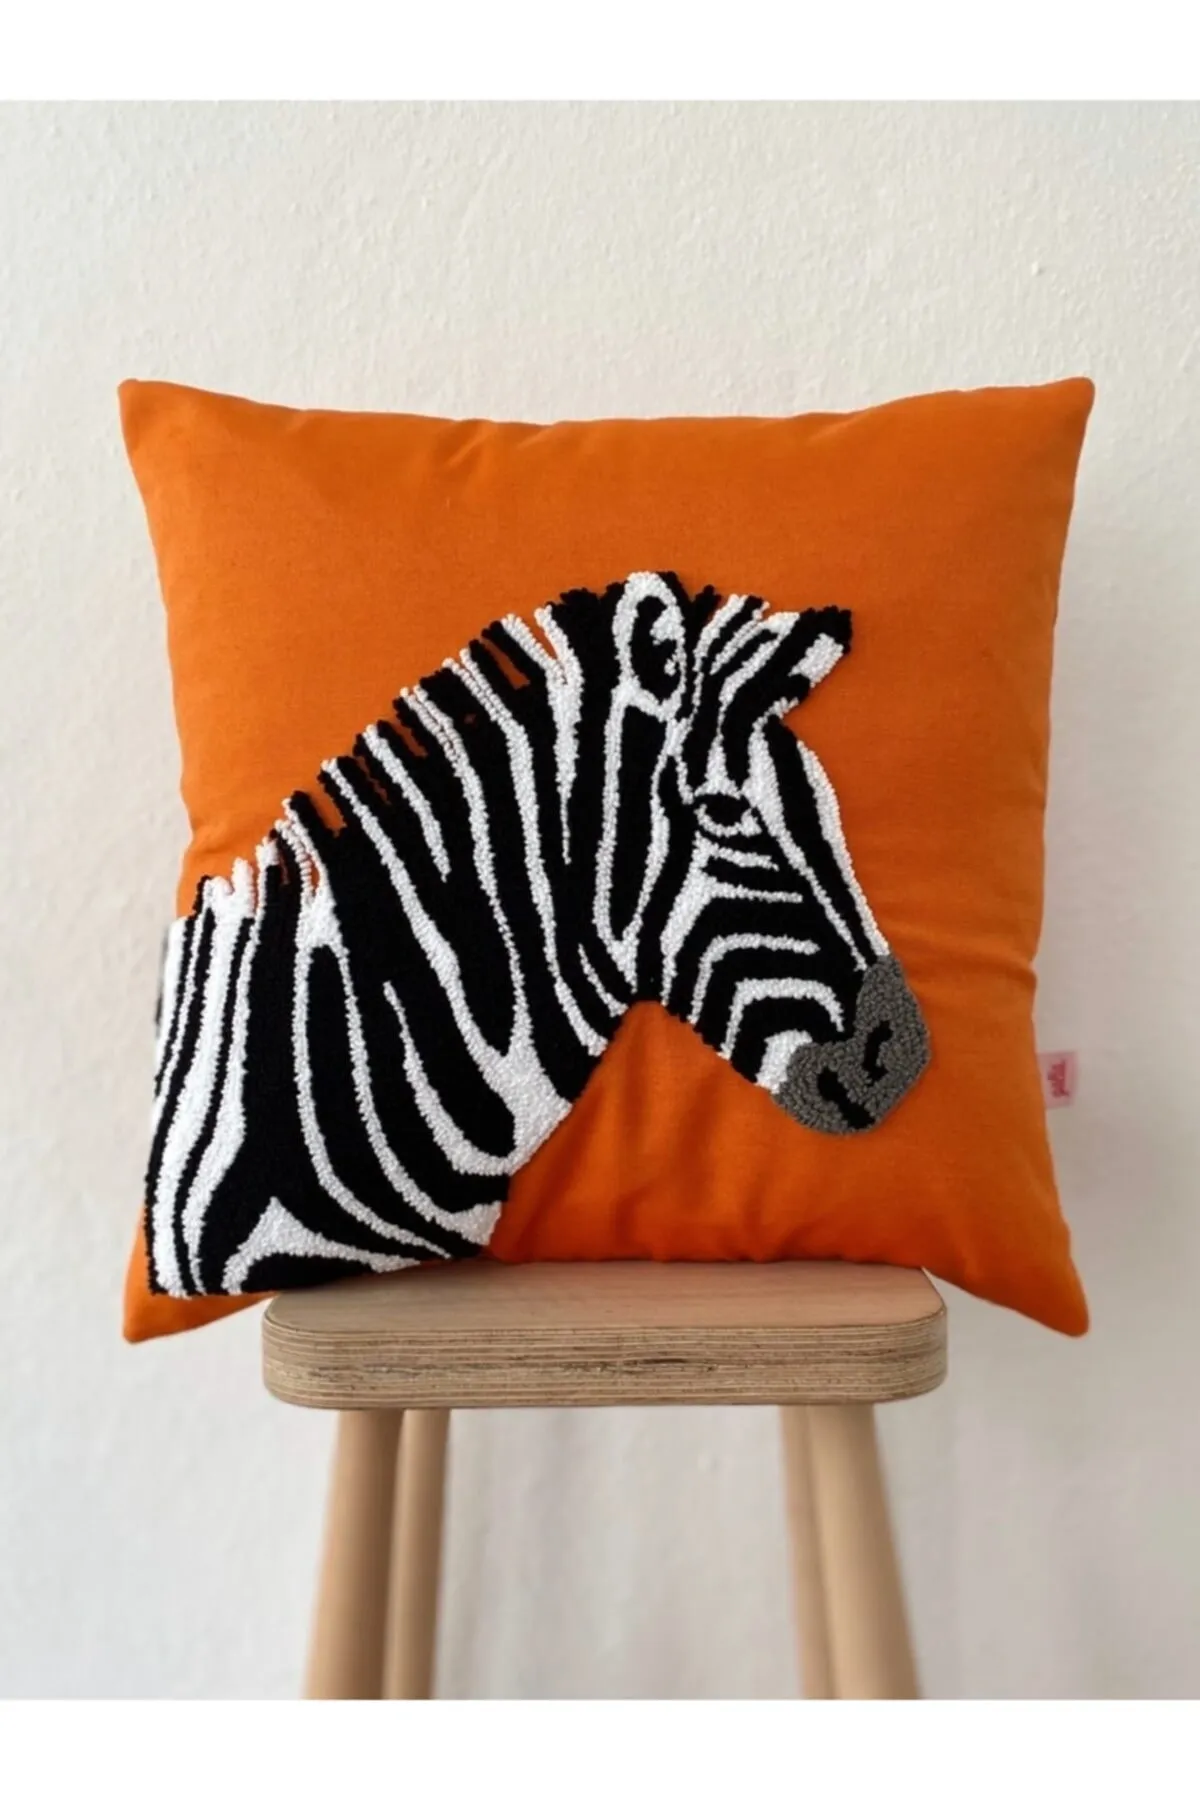 Orange Zebra Figured Punch Cushion Pillow Cover